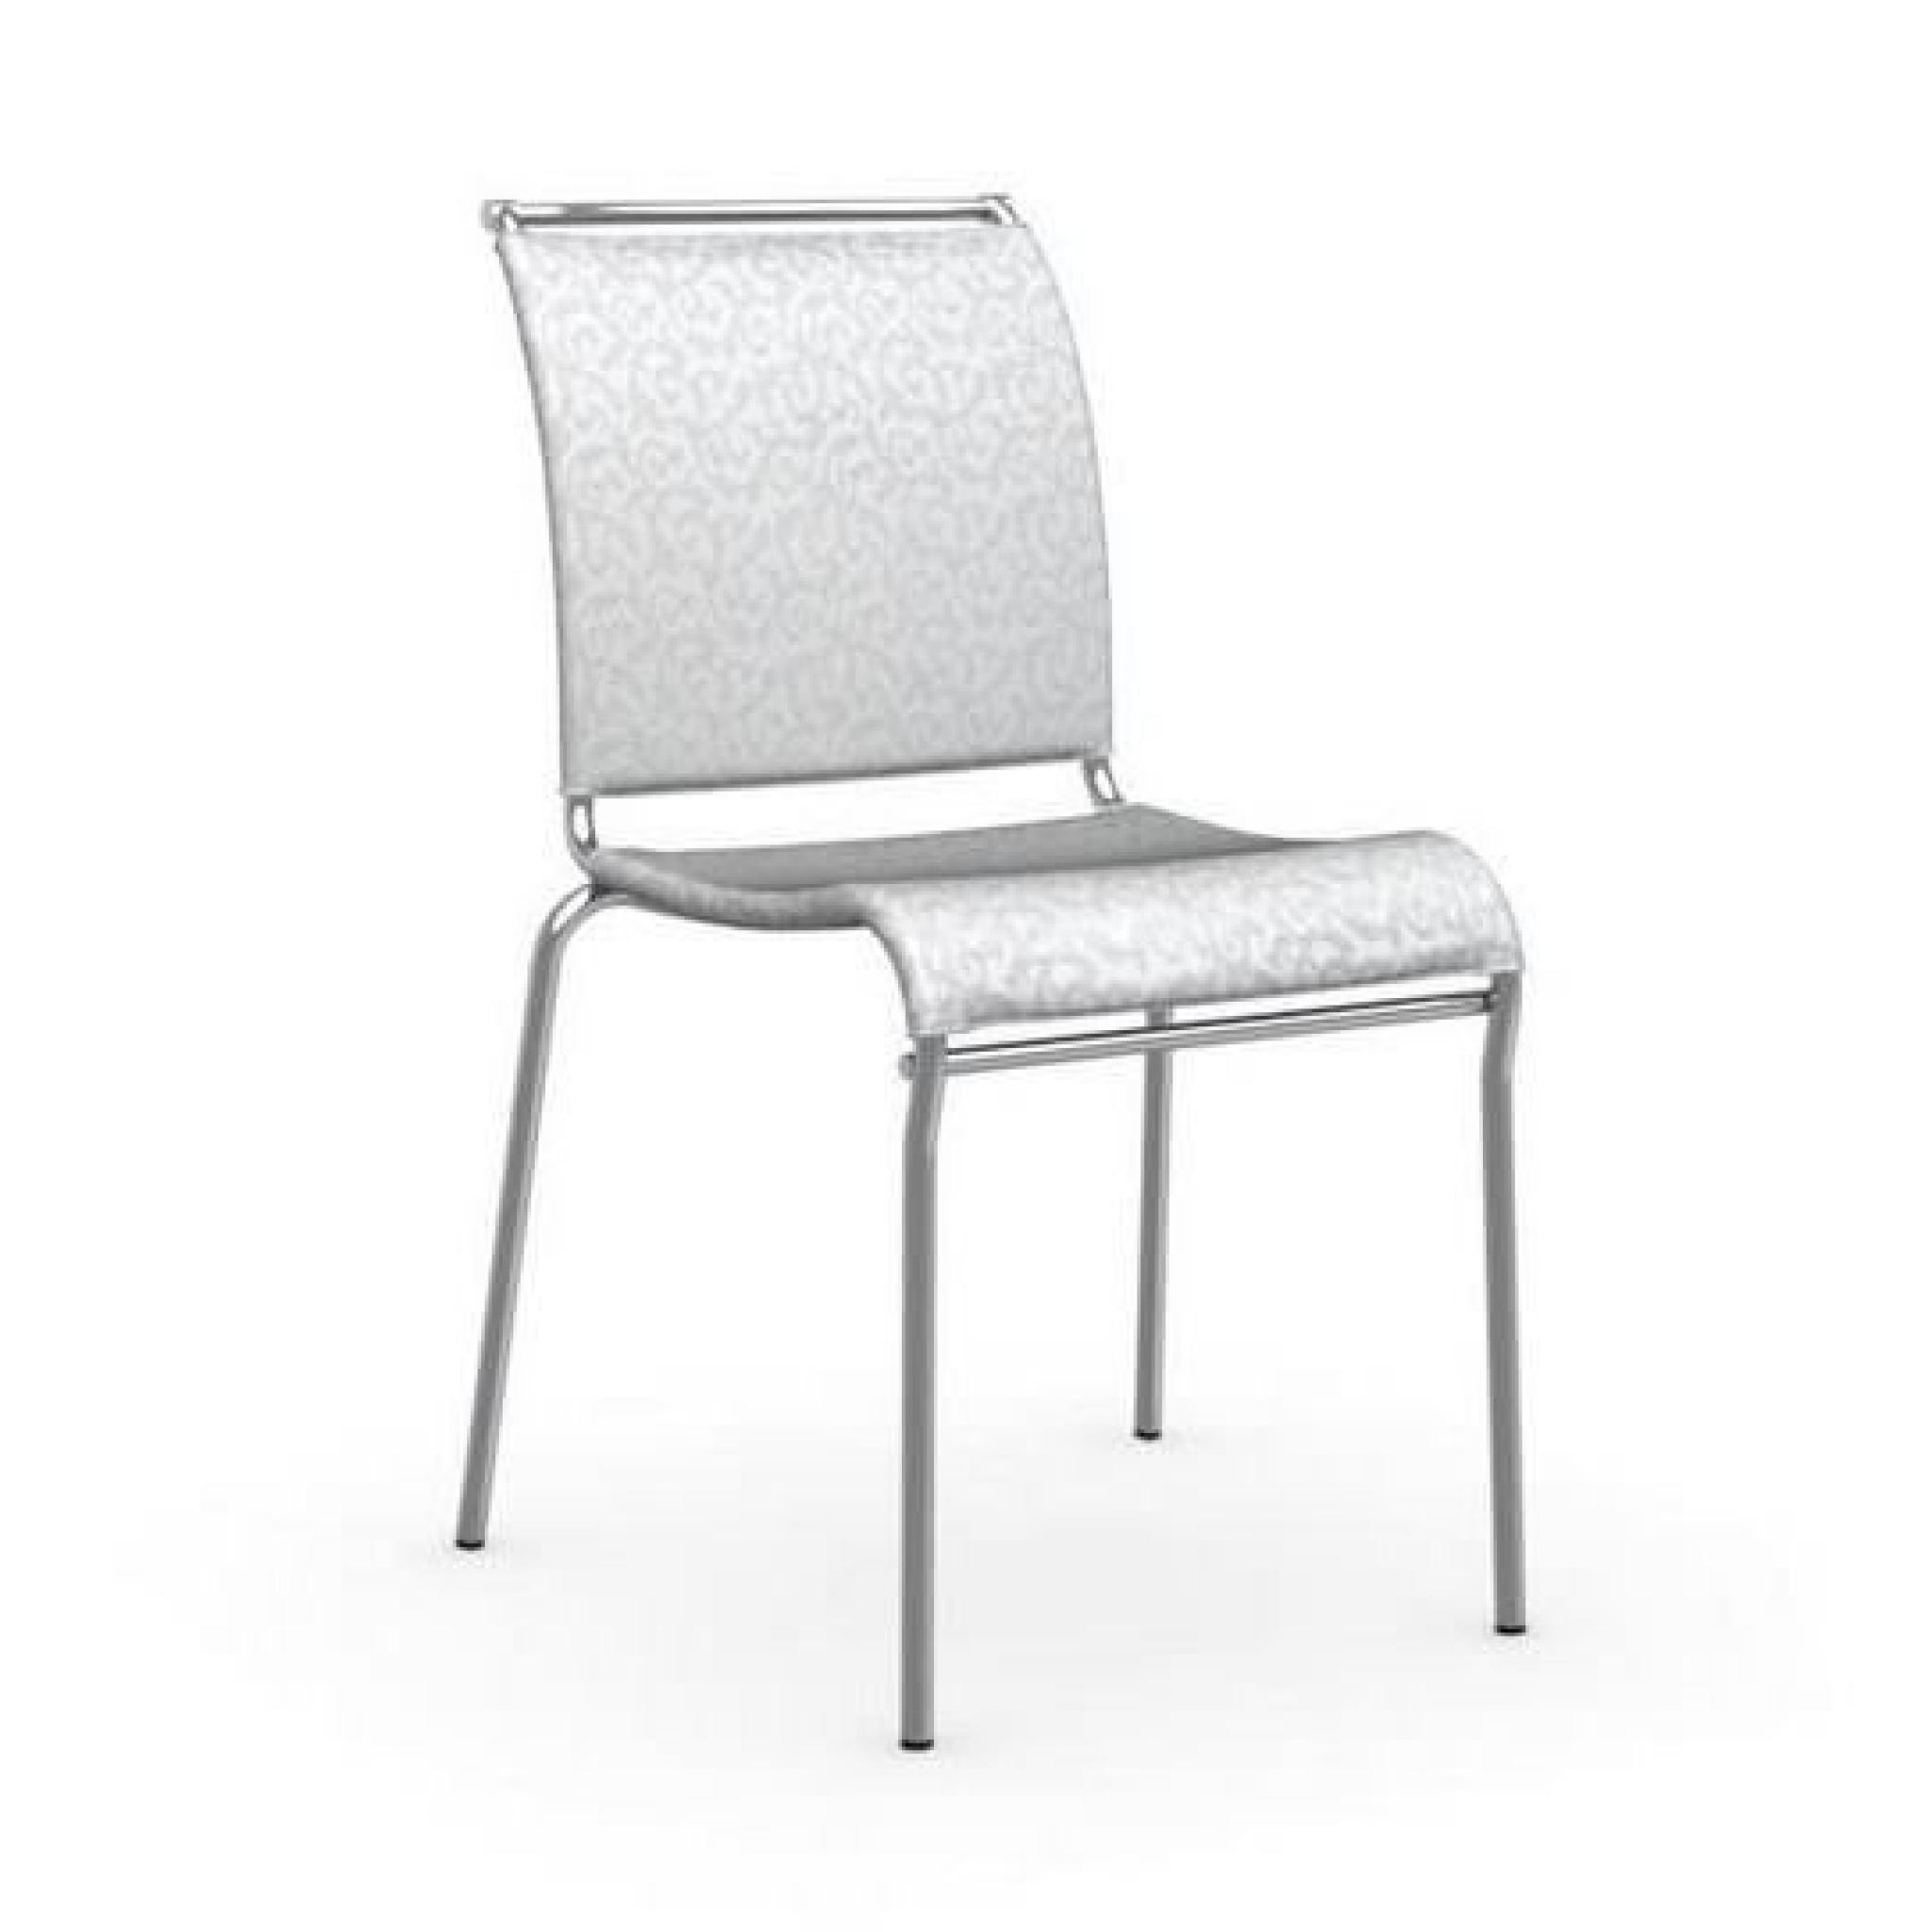 Chaise italienne AIR en tissu arabesque coloris blanc de CALLIGARIS